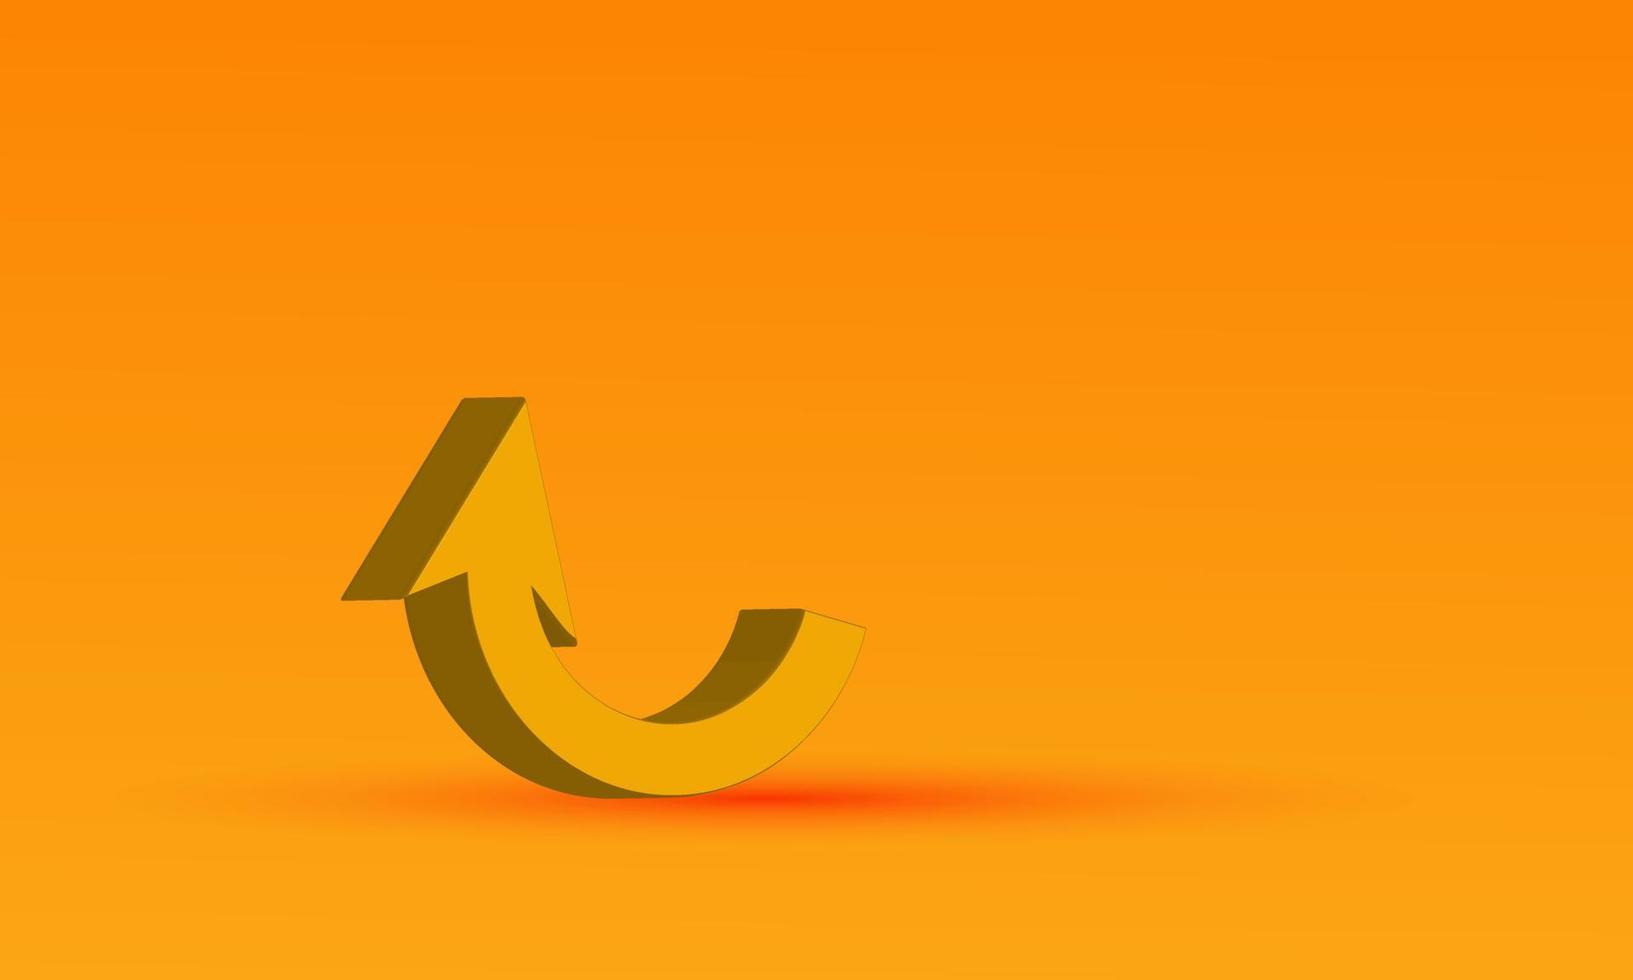 3d yellow arrow icon isolated on orange background vector